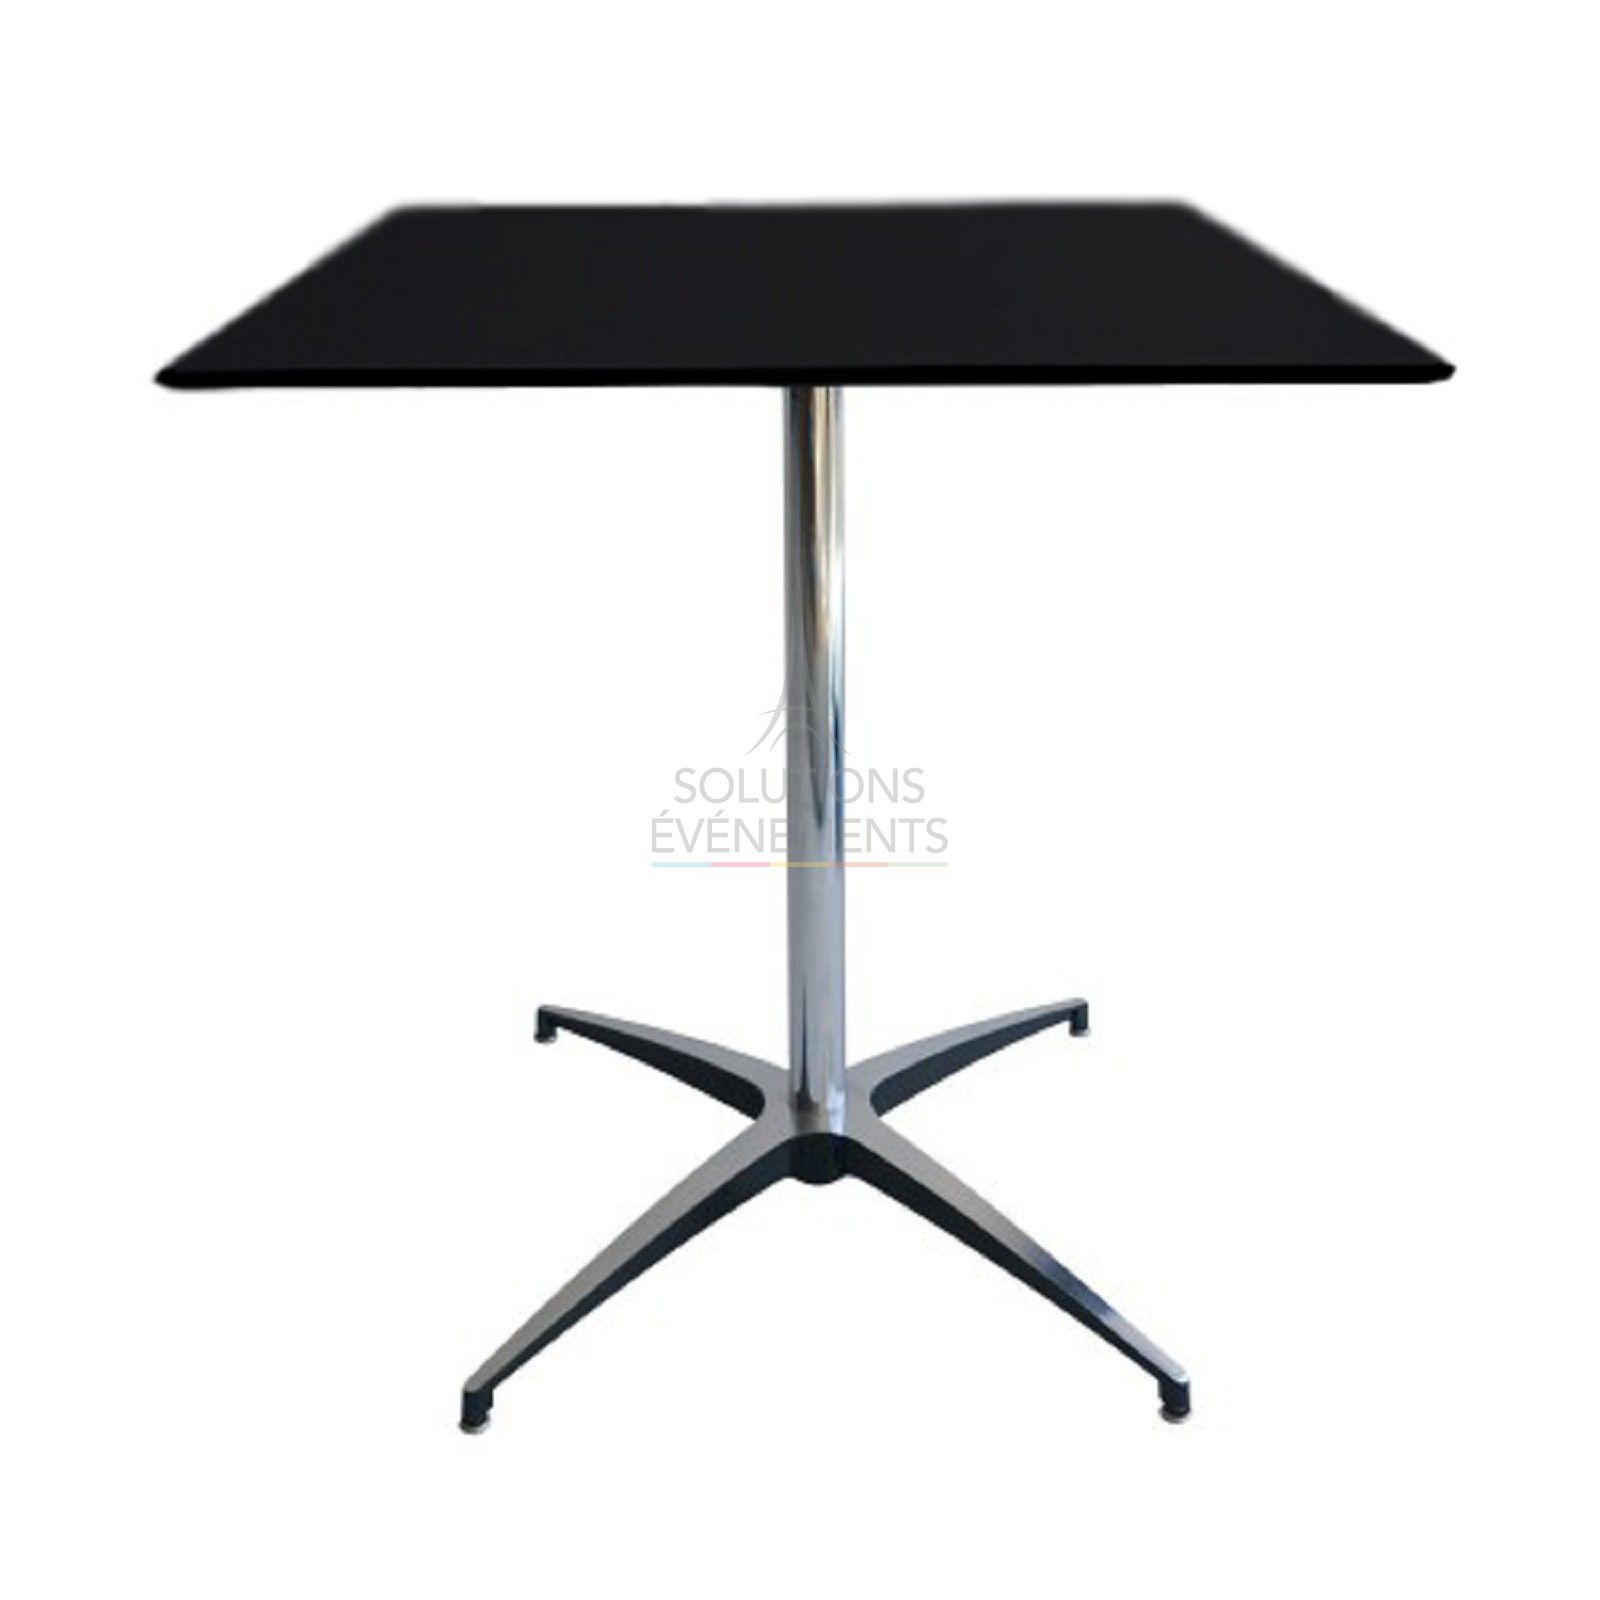 Rental of black 80cm square-shaped pedestal table